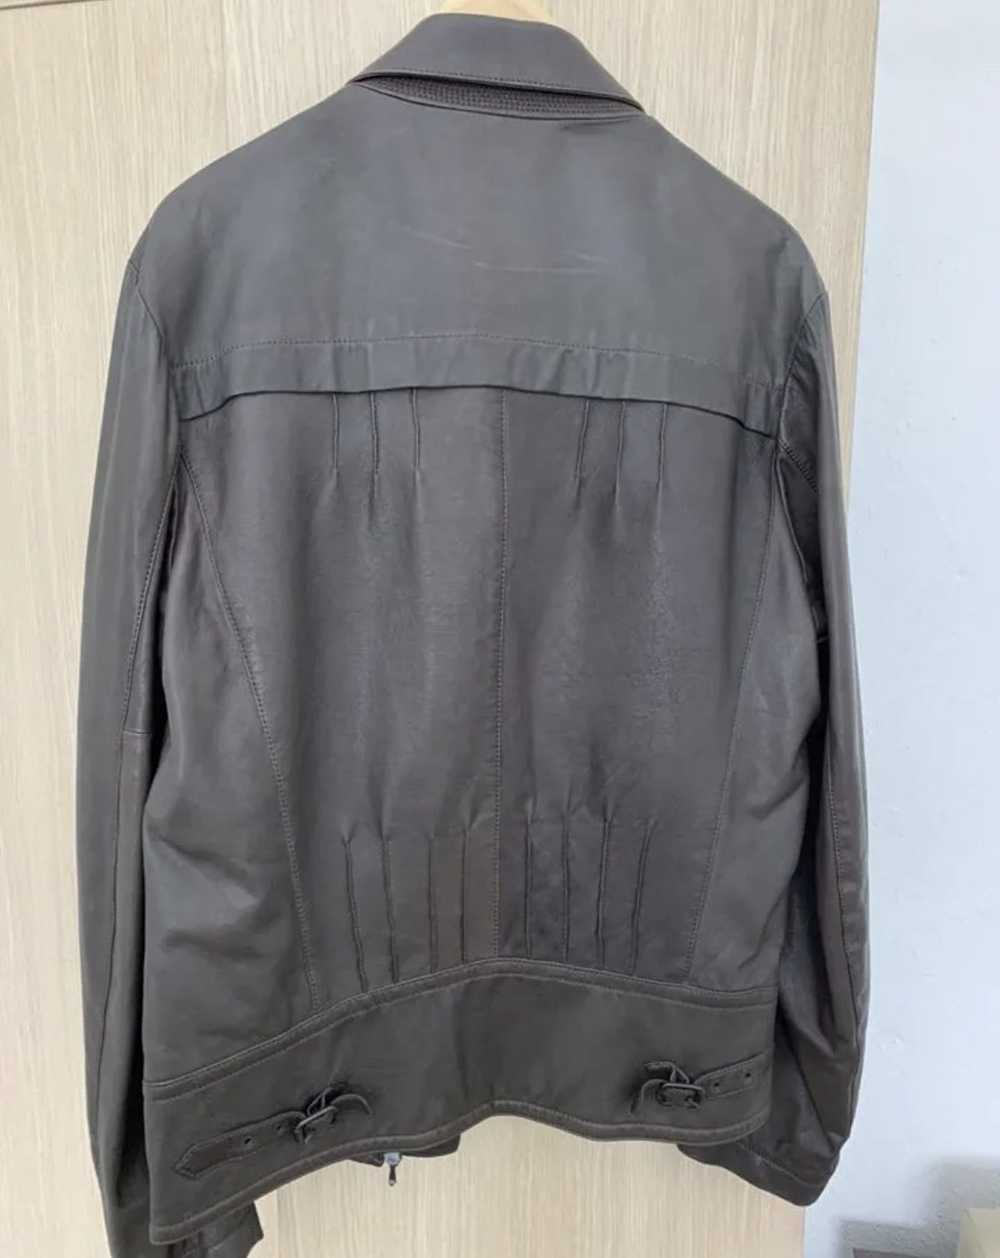 Yohji Yamamoto Yohji Yamamoto Leather Jacket - image 2